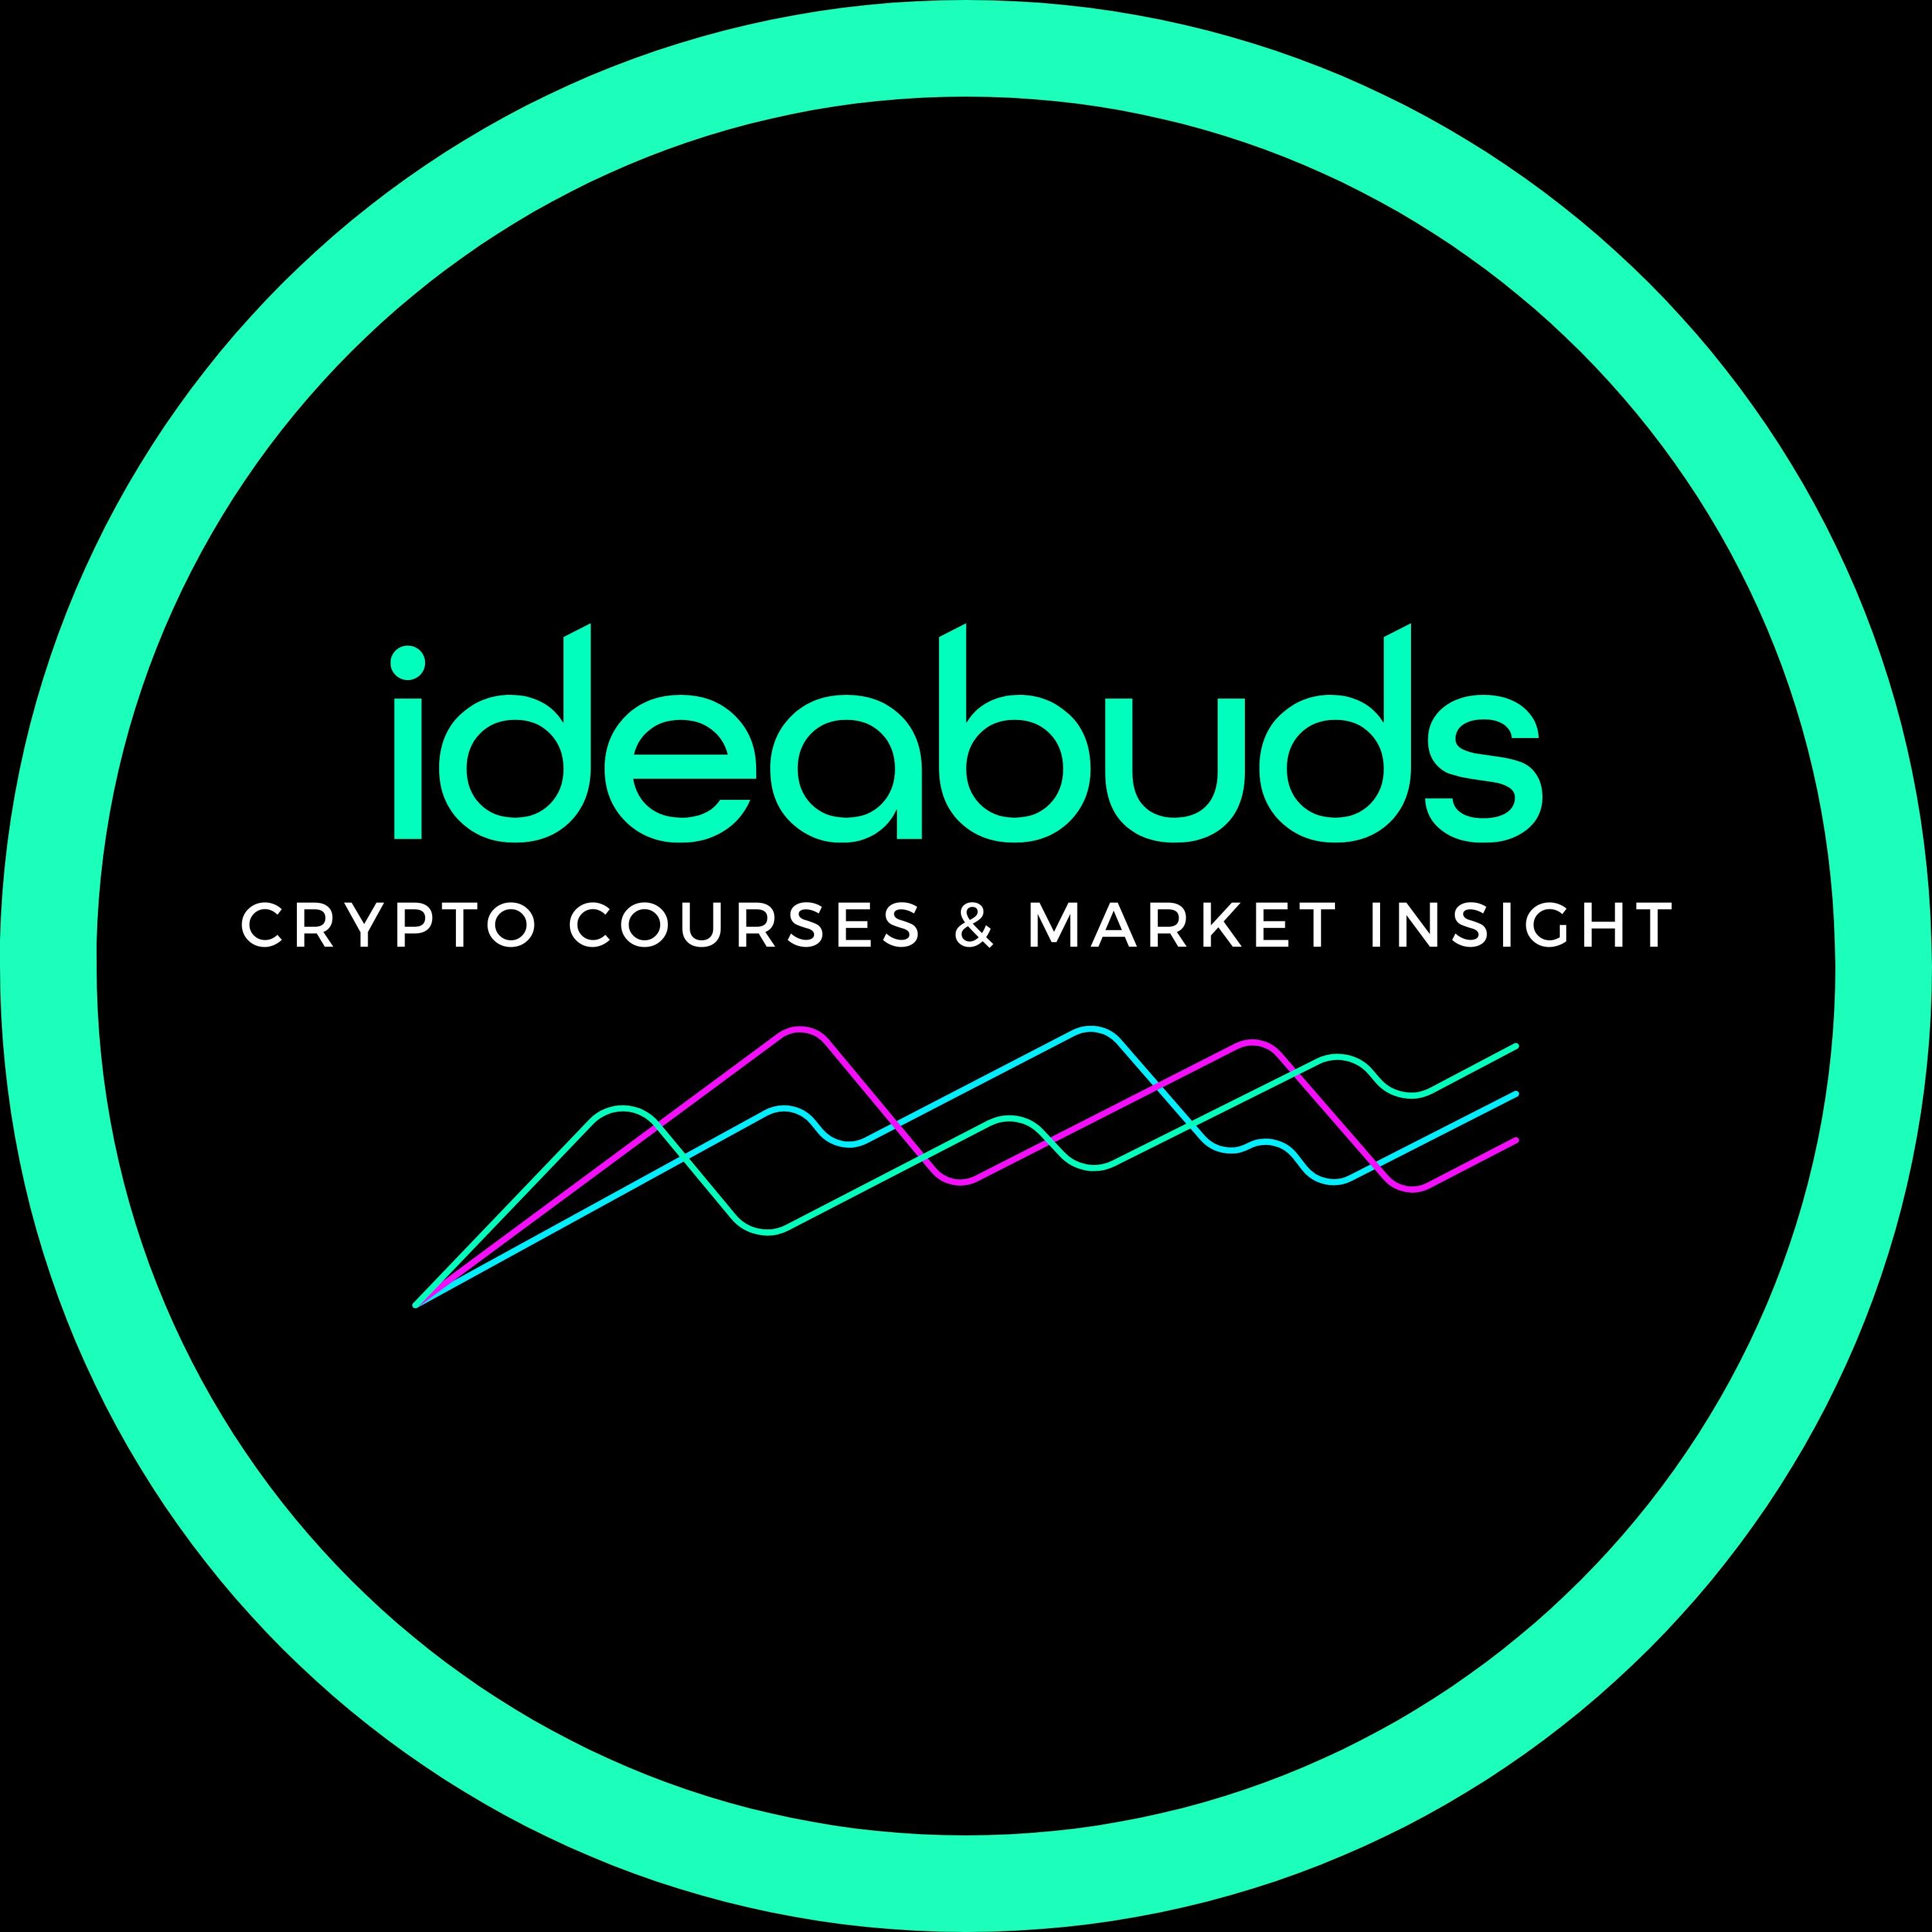 Ideabuds